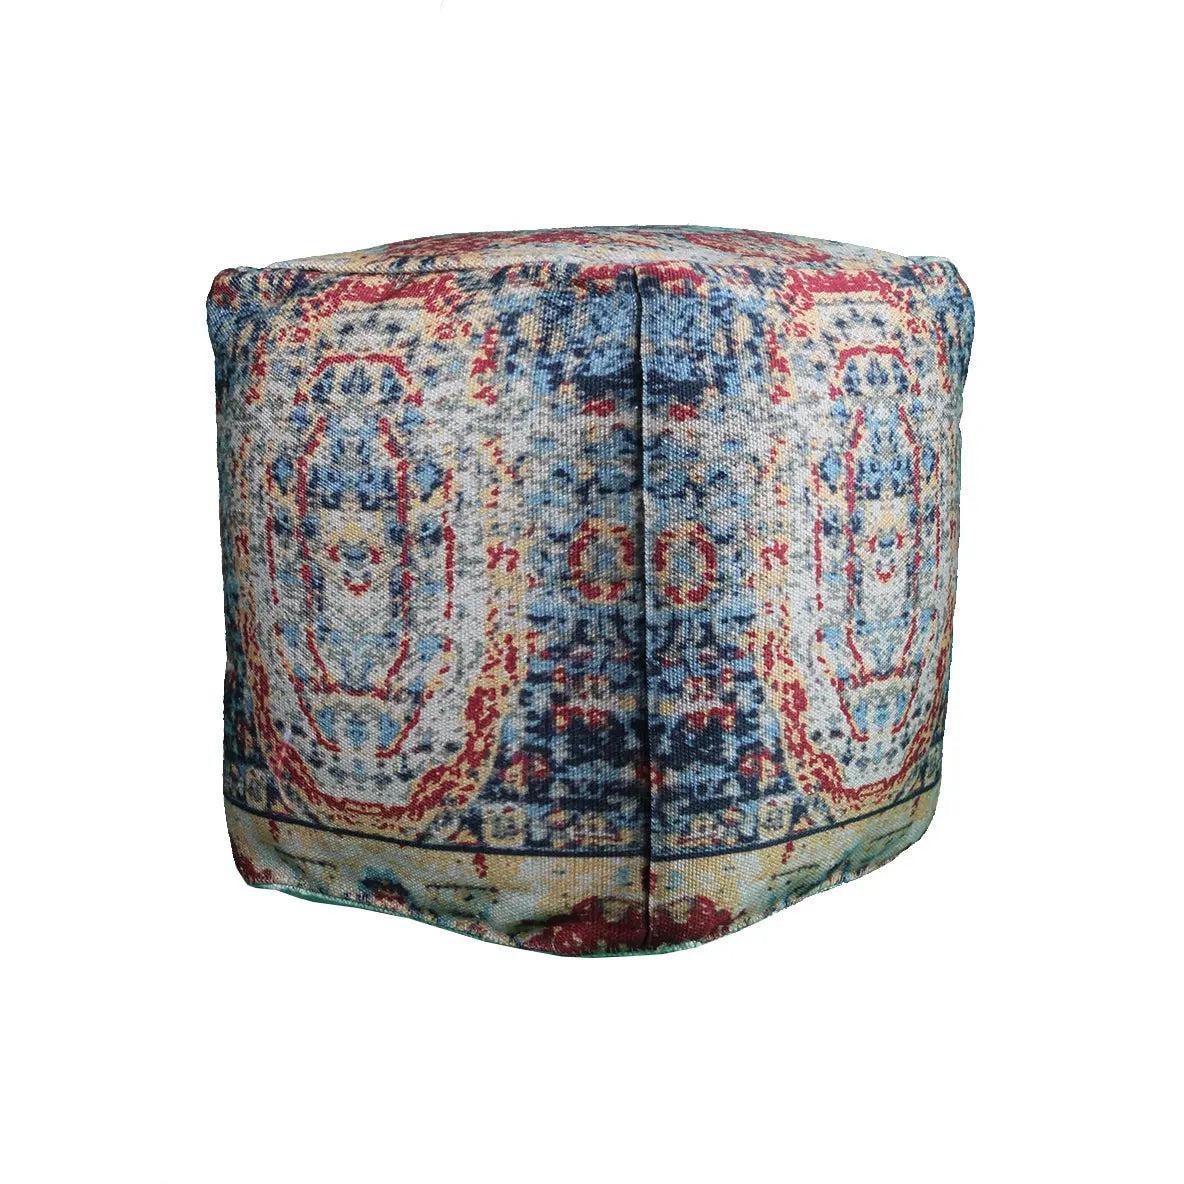 Square Stuffed Multi-Colored Cotton Pouf Handmade Fabric Ottoman